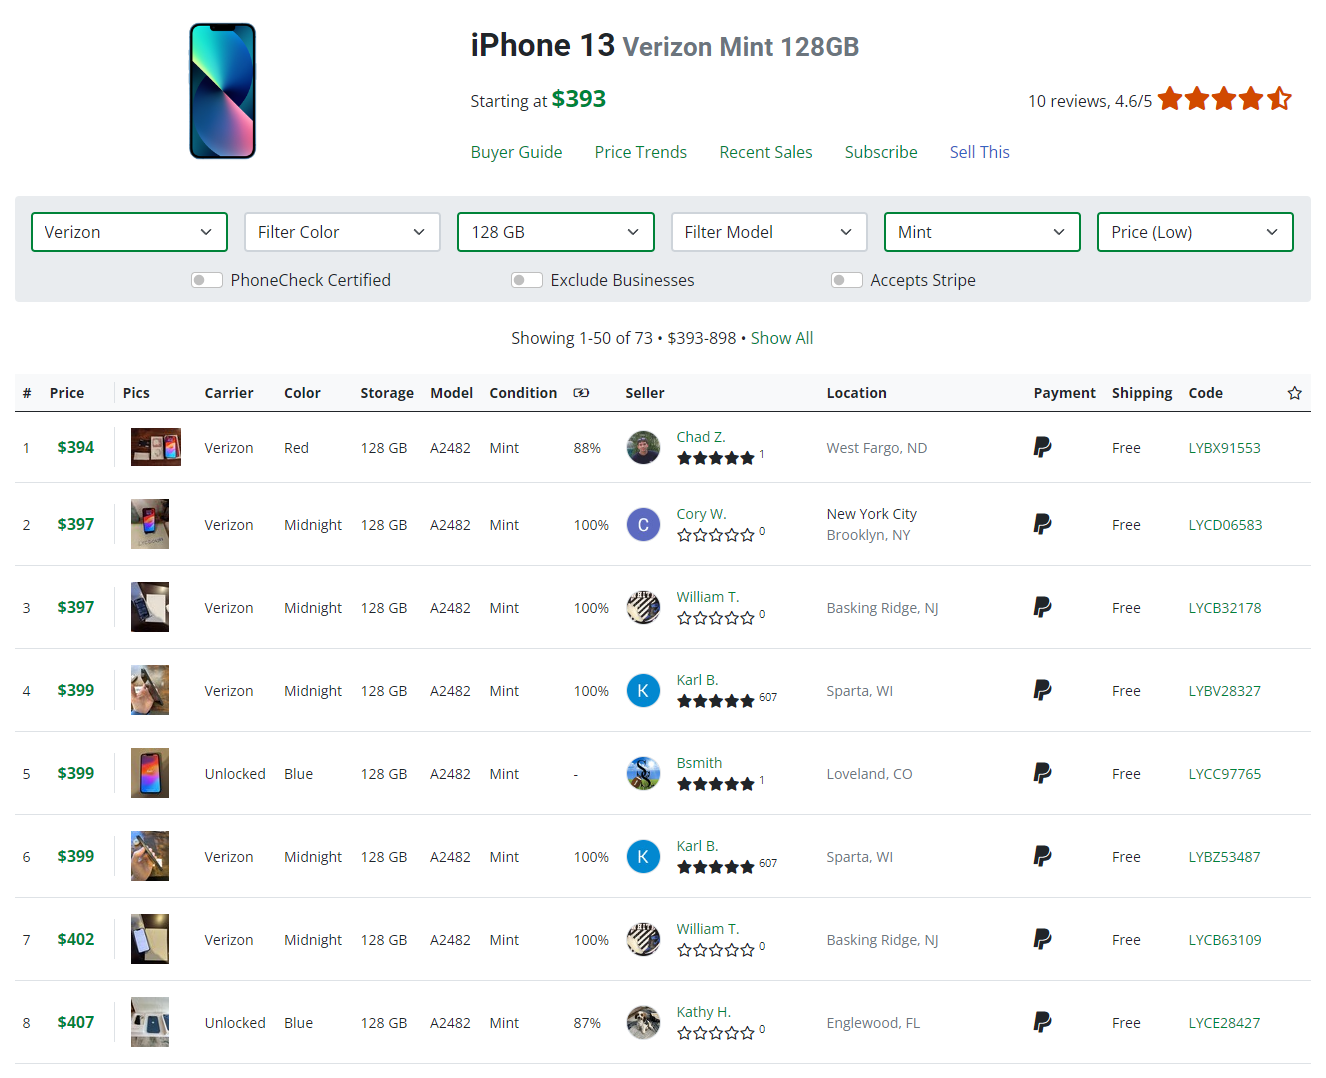 iPhone 13 Verizon Mint 128GB listings on Swappa